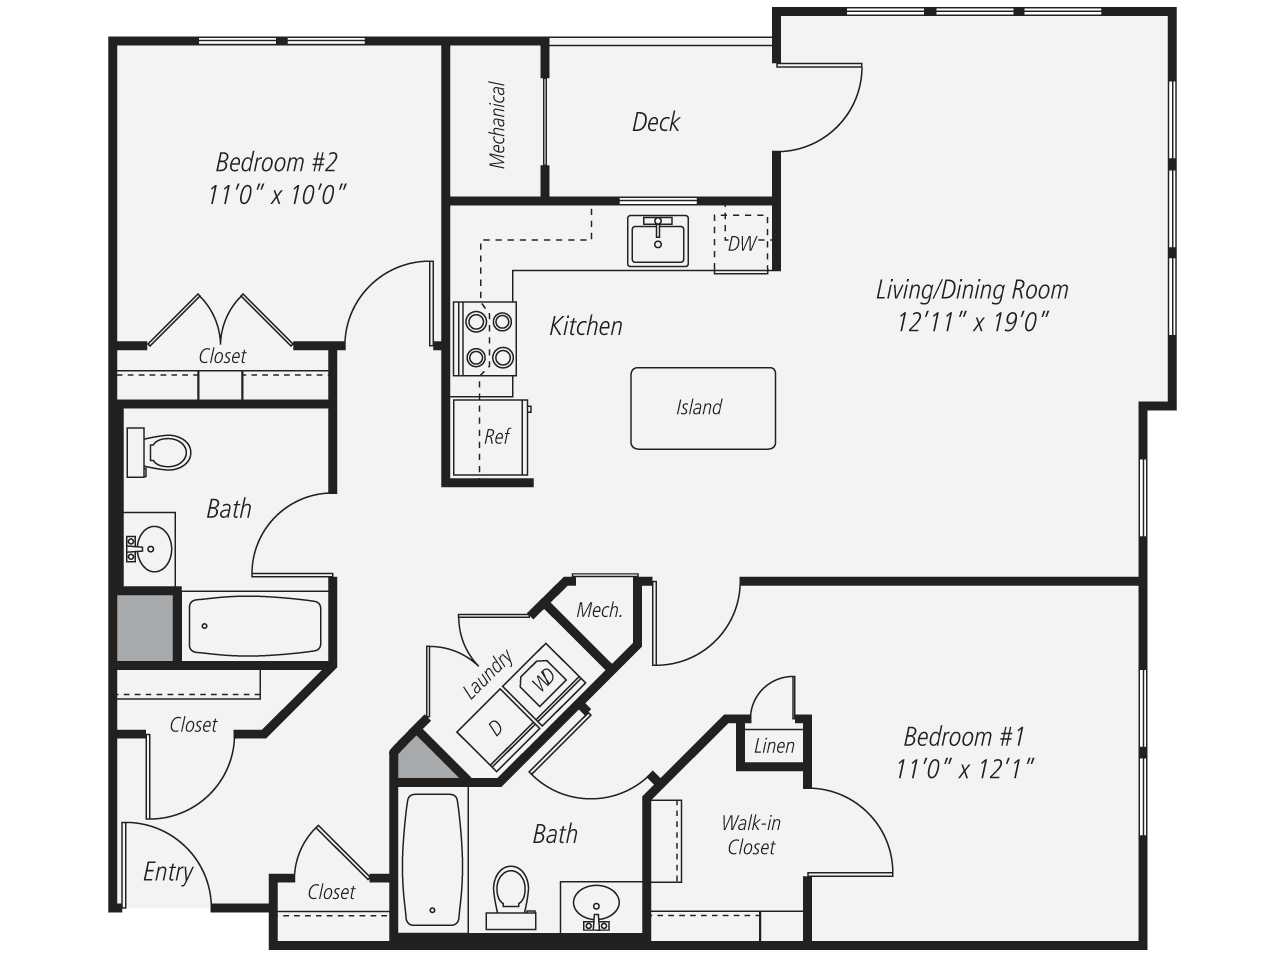 Floorplan for Apartment #107, 2 bedroom unit at Halstead Norwalk